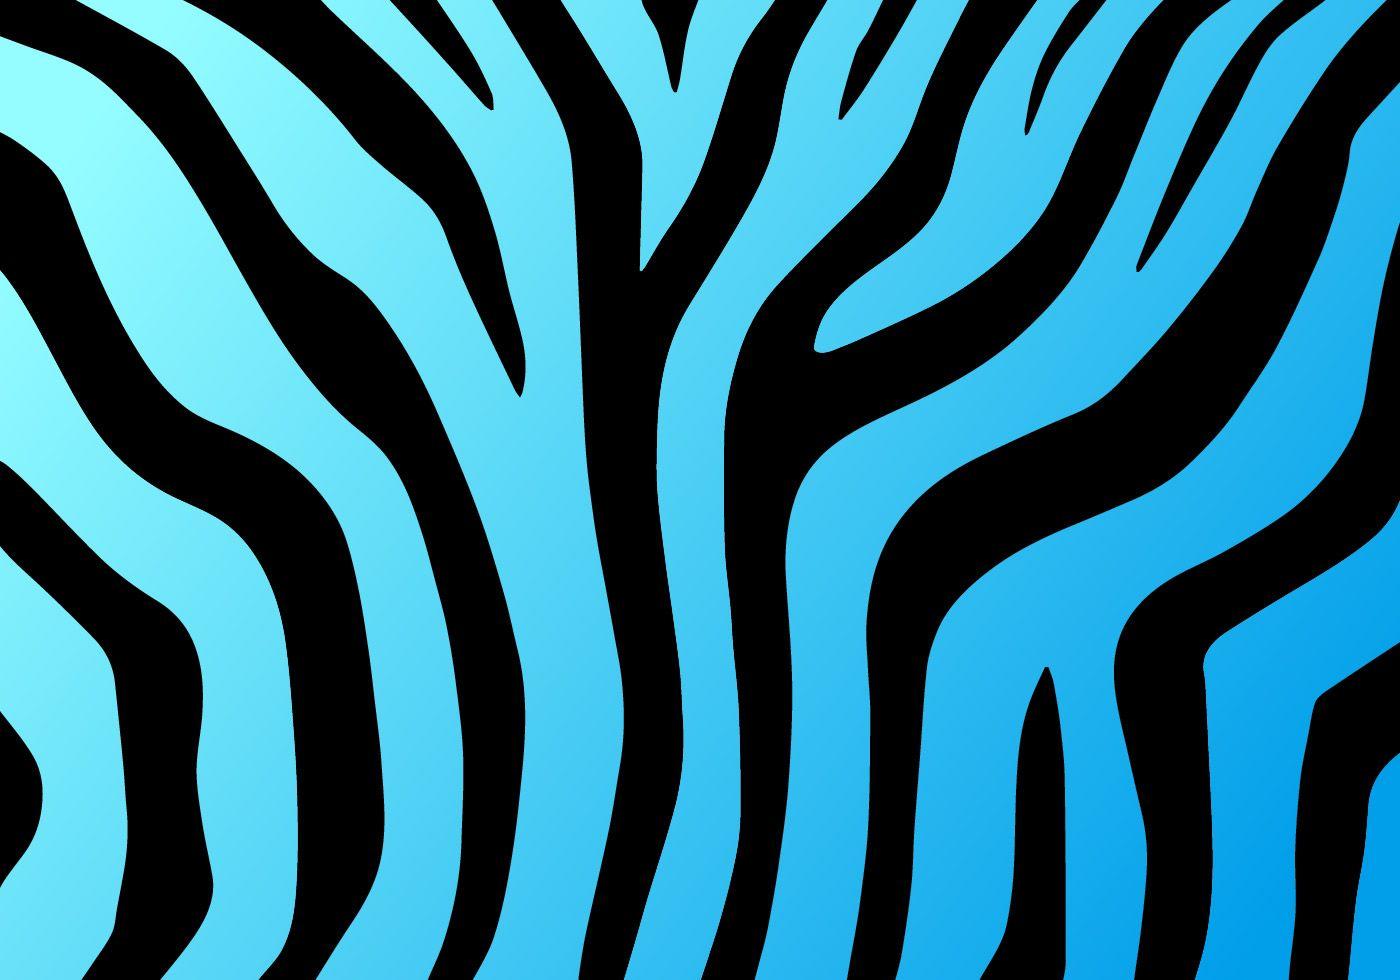 Zebra Free Vector Art - (7423 Free Downloads)